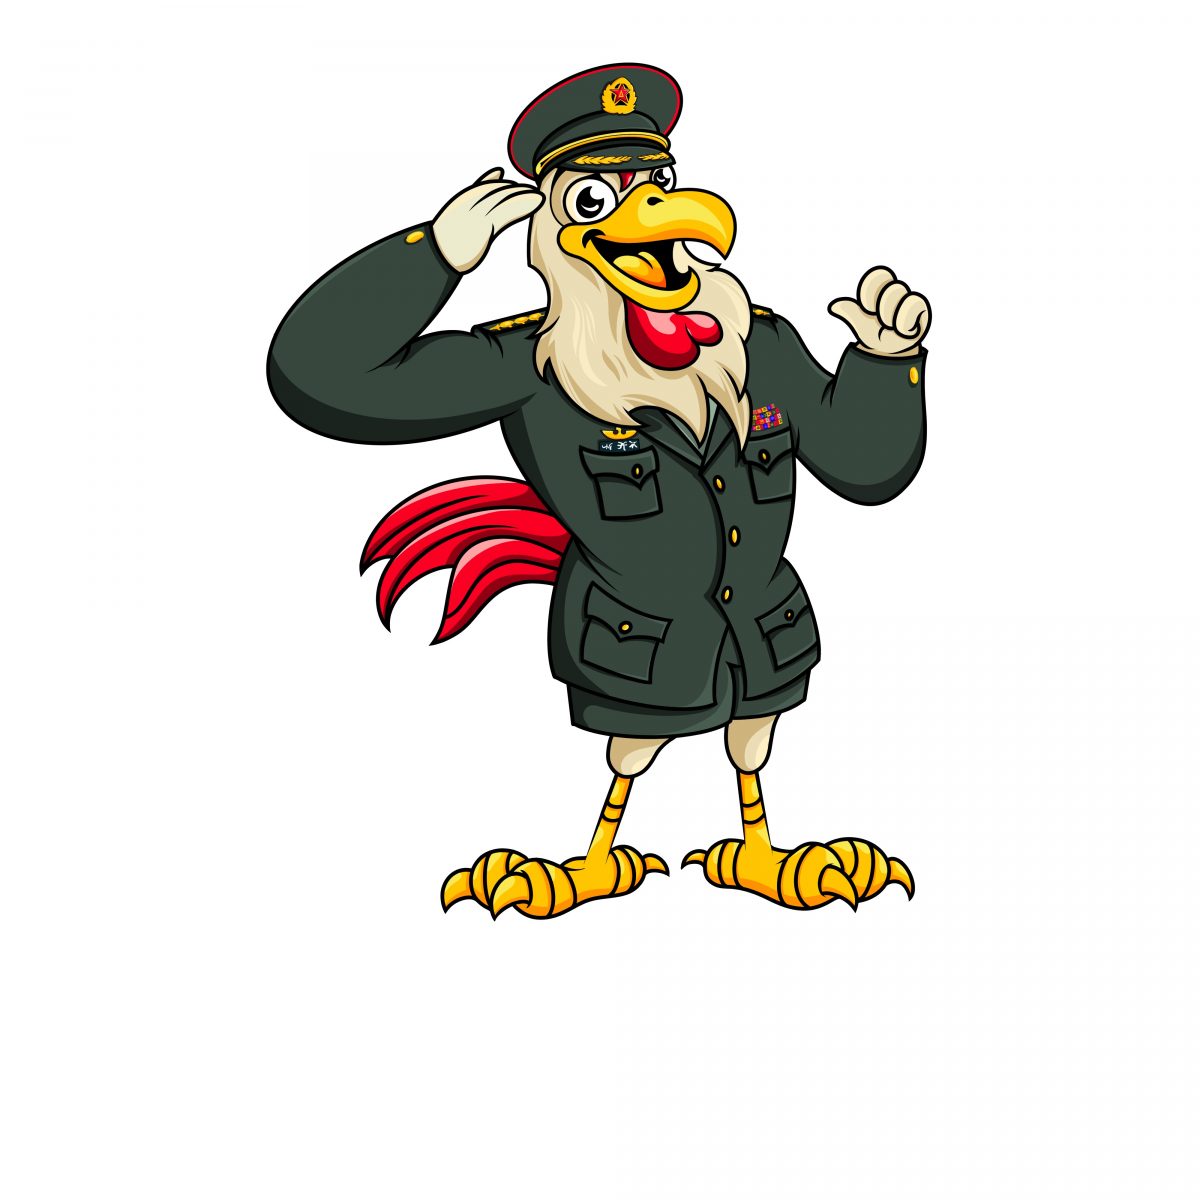 General Chicken logo from Freelancer.com